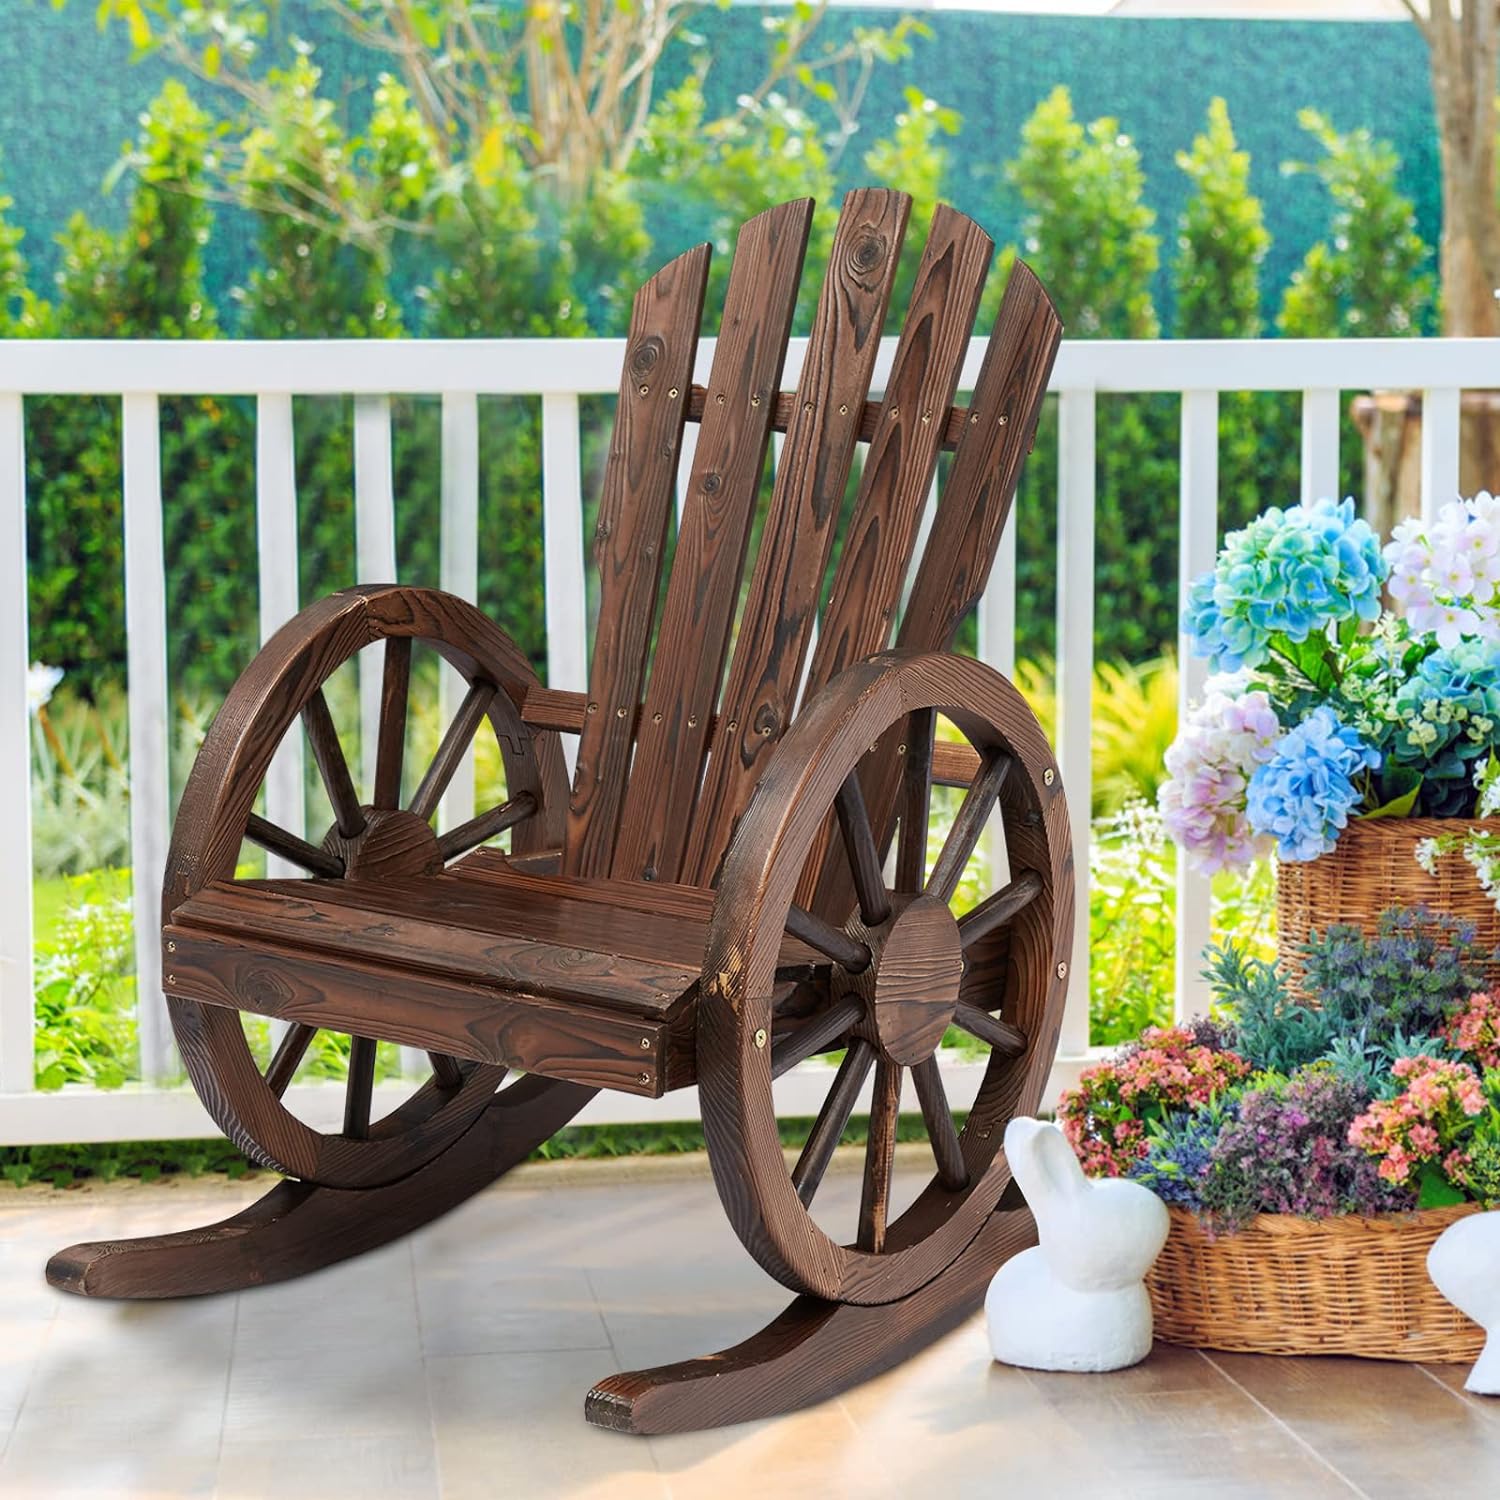 Kinbor Wagon Wheel Wood Rocking Chair Outdoor Furniture Patio Chairs Armrest Rocker - image 1 of 7